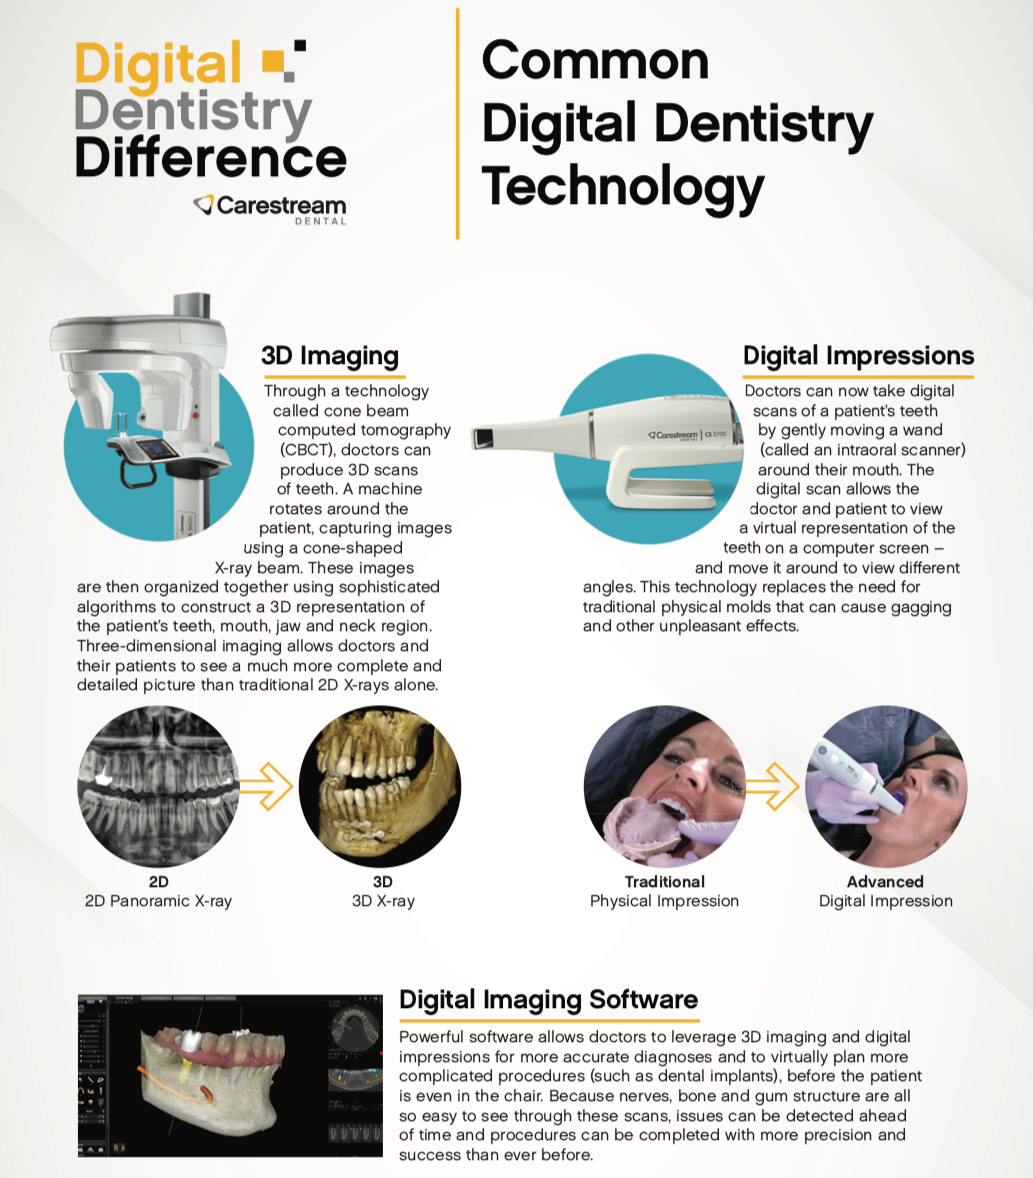 Digital Dentistry Technology